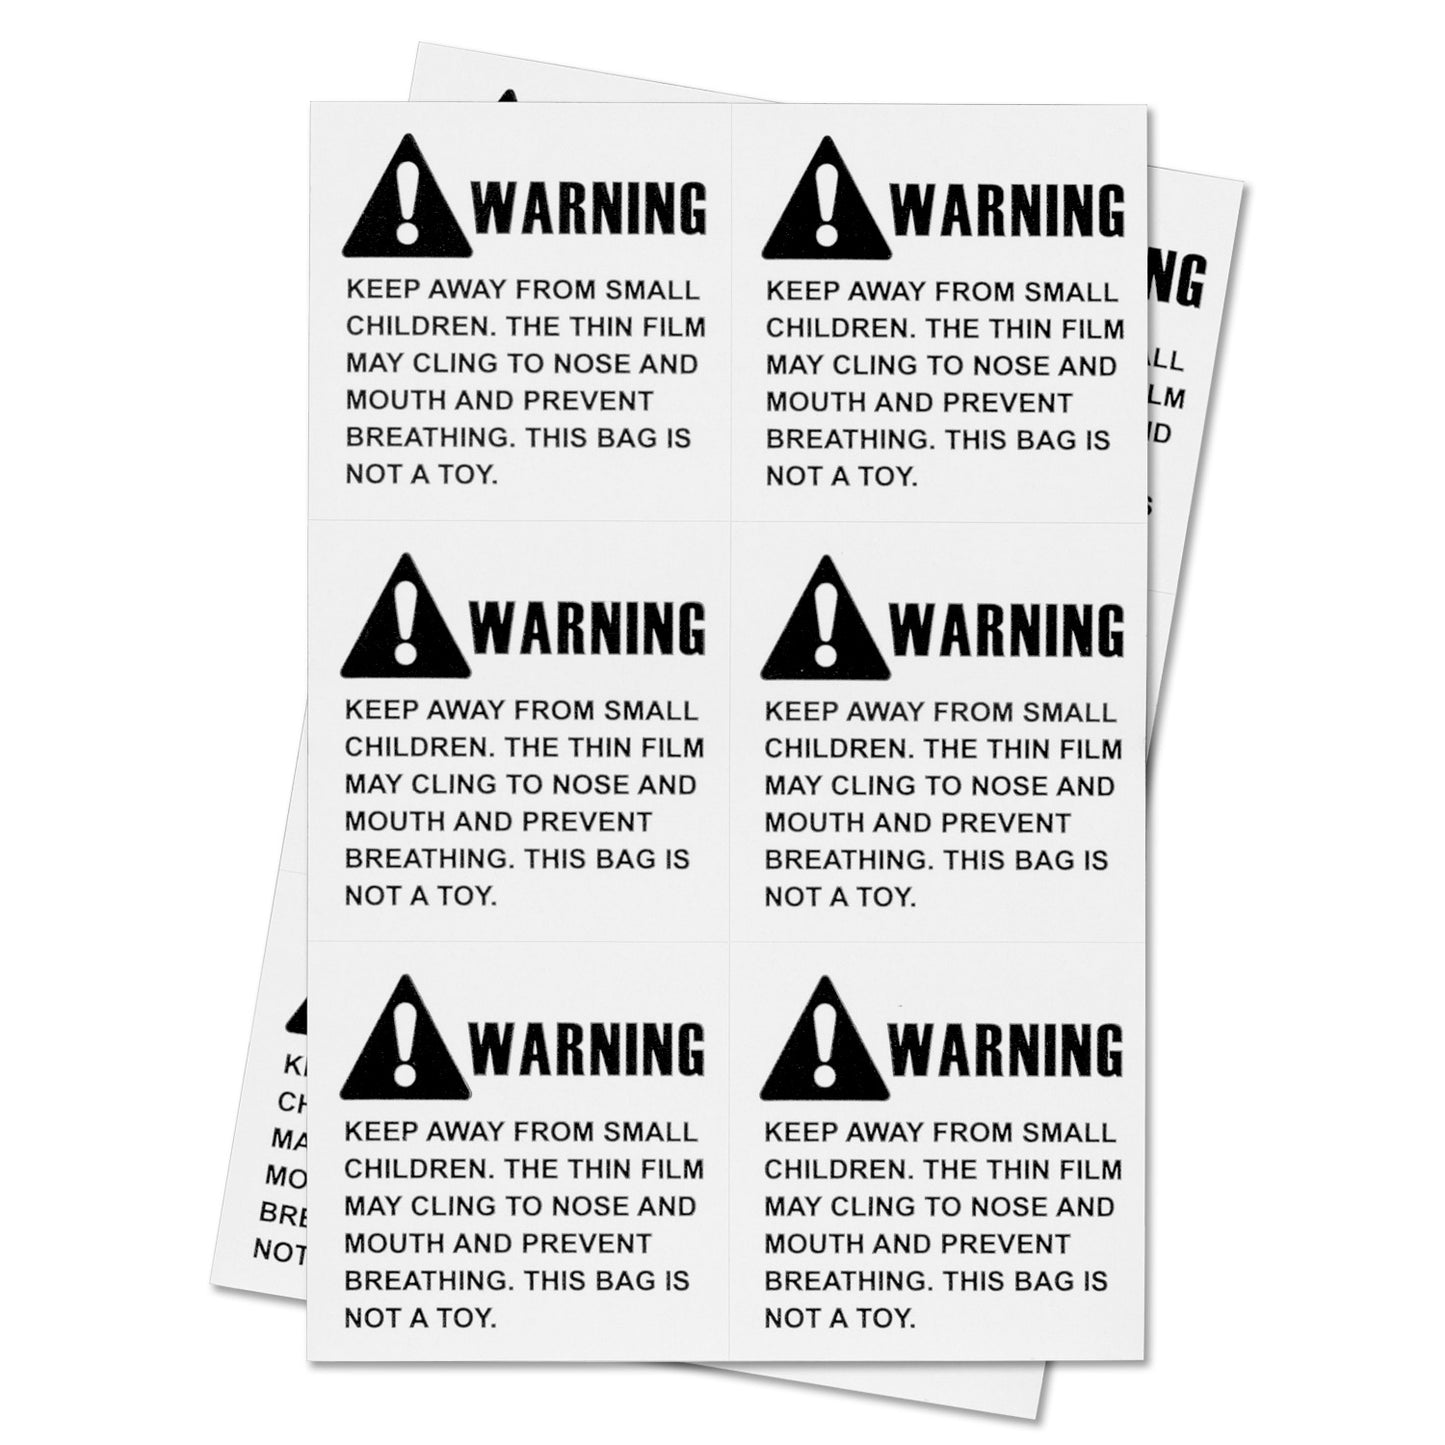 2 inch | Suffocation Warning Stickers, Plastic Bag Warning